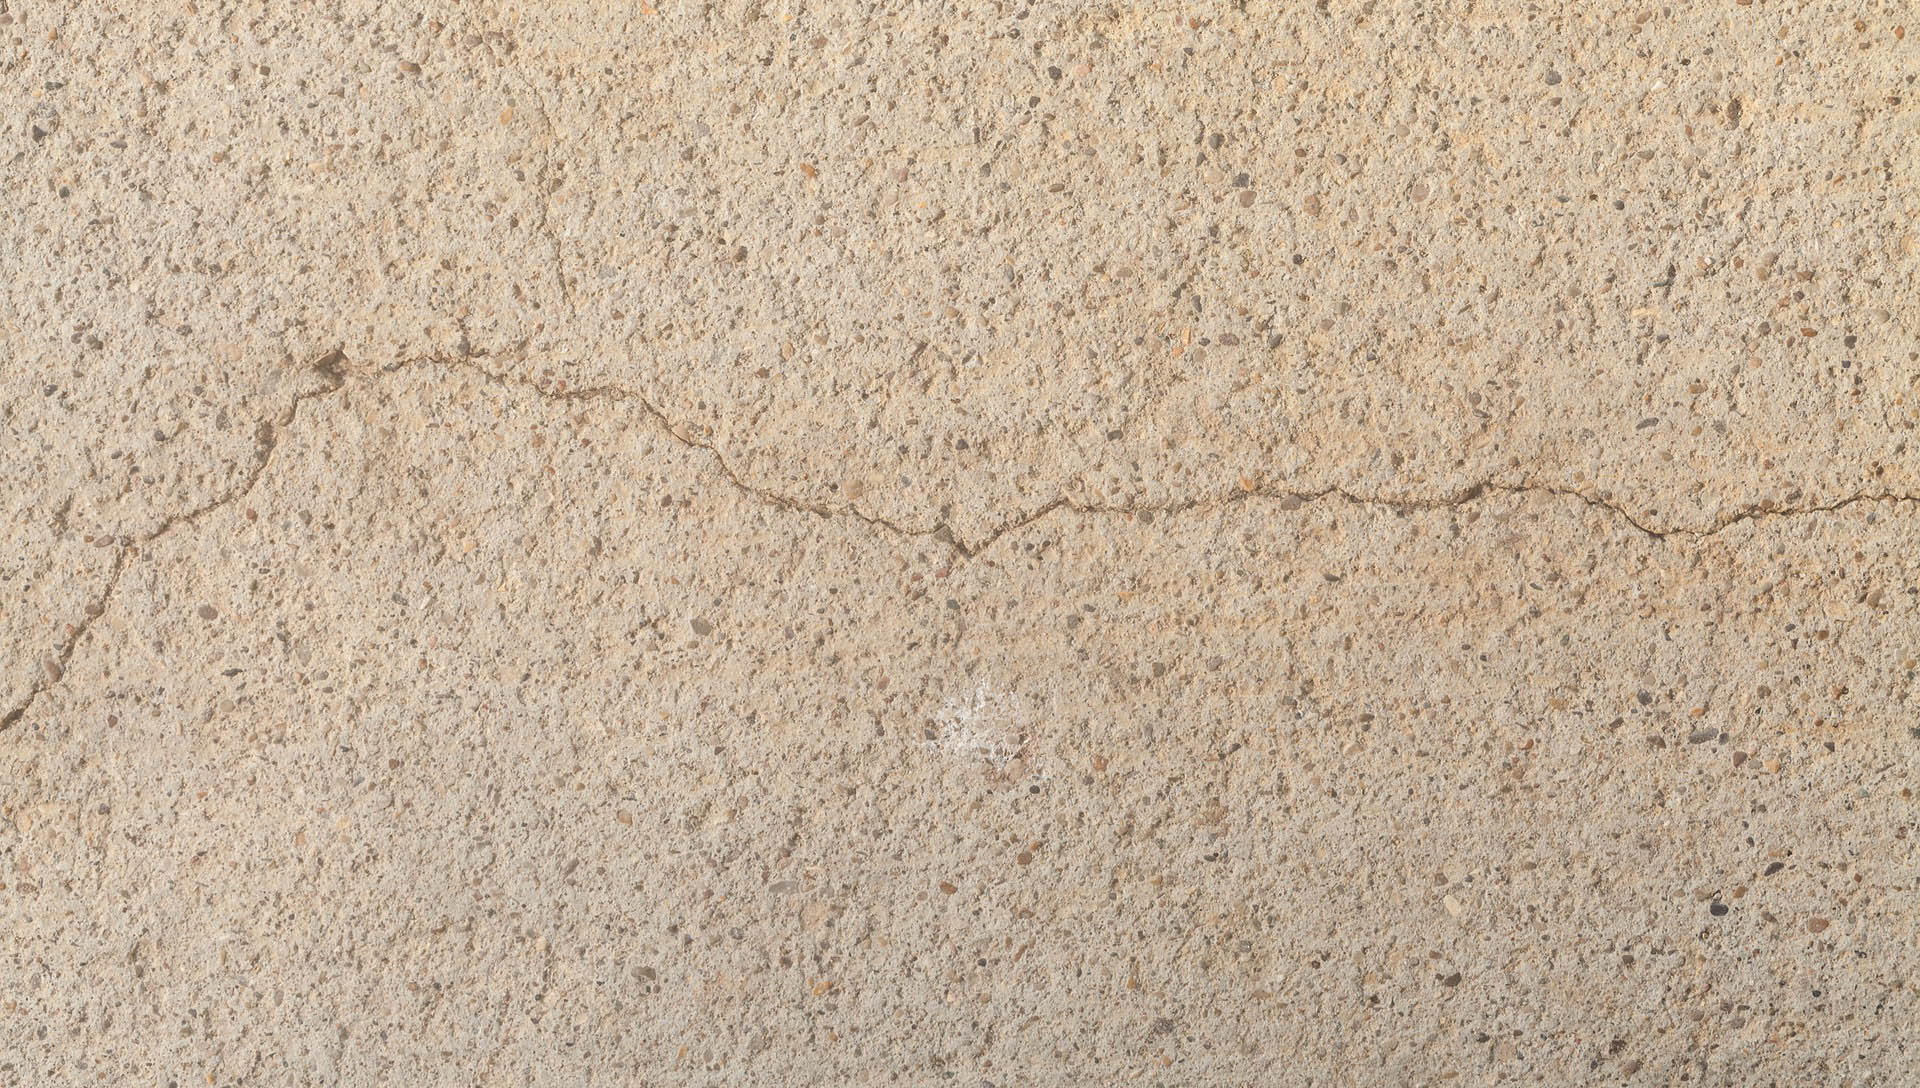 Concrete Pool Deck Cracks: Causes, Types, Repair Methods